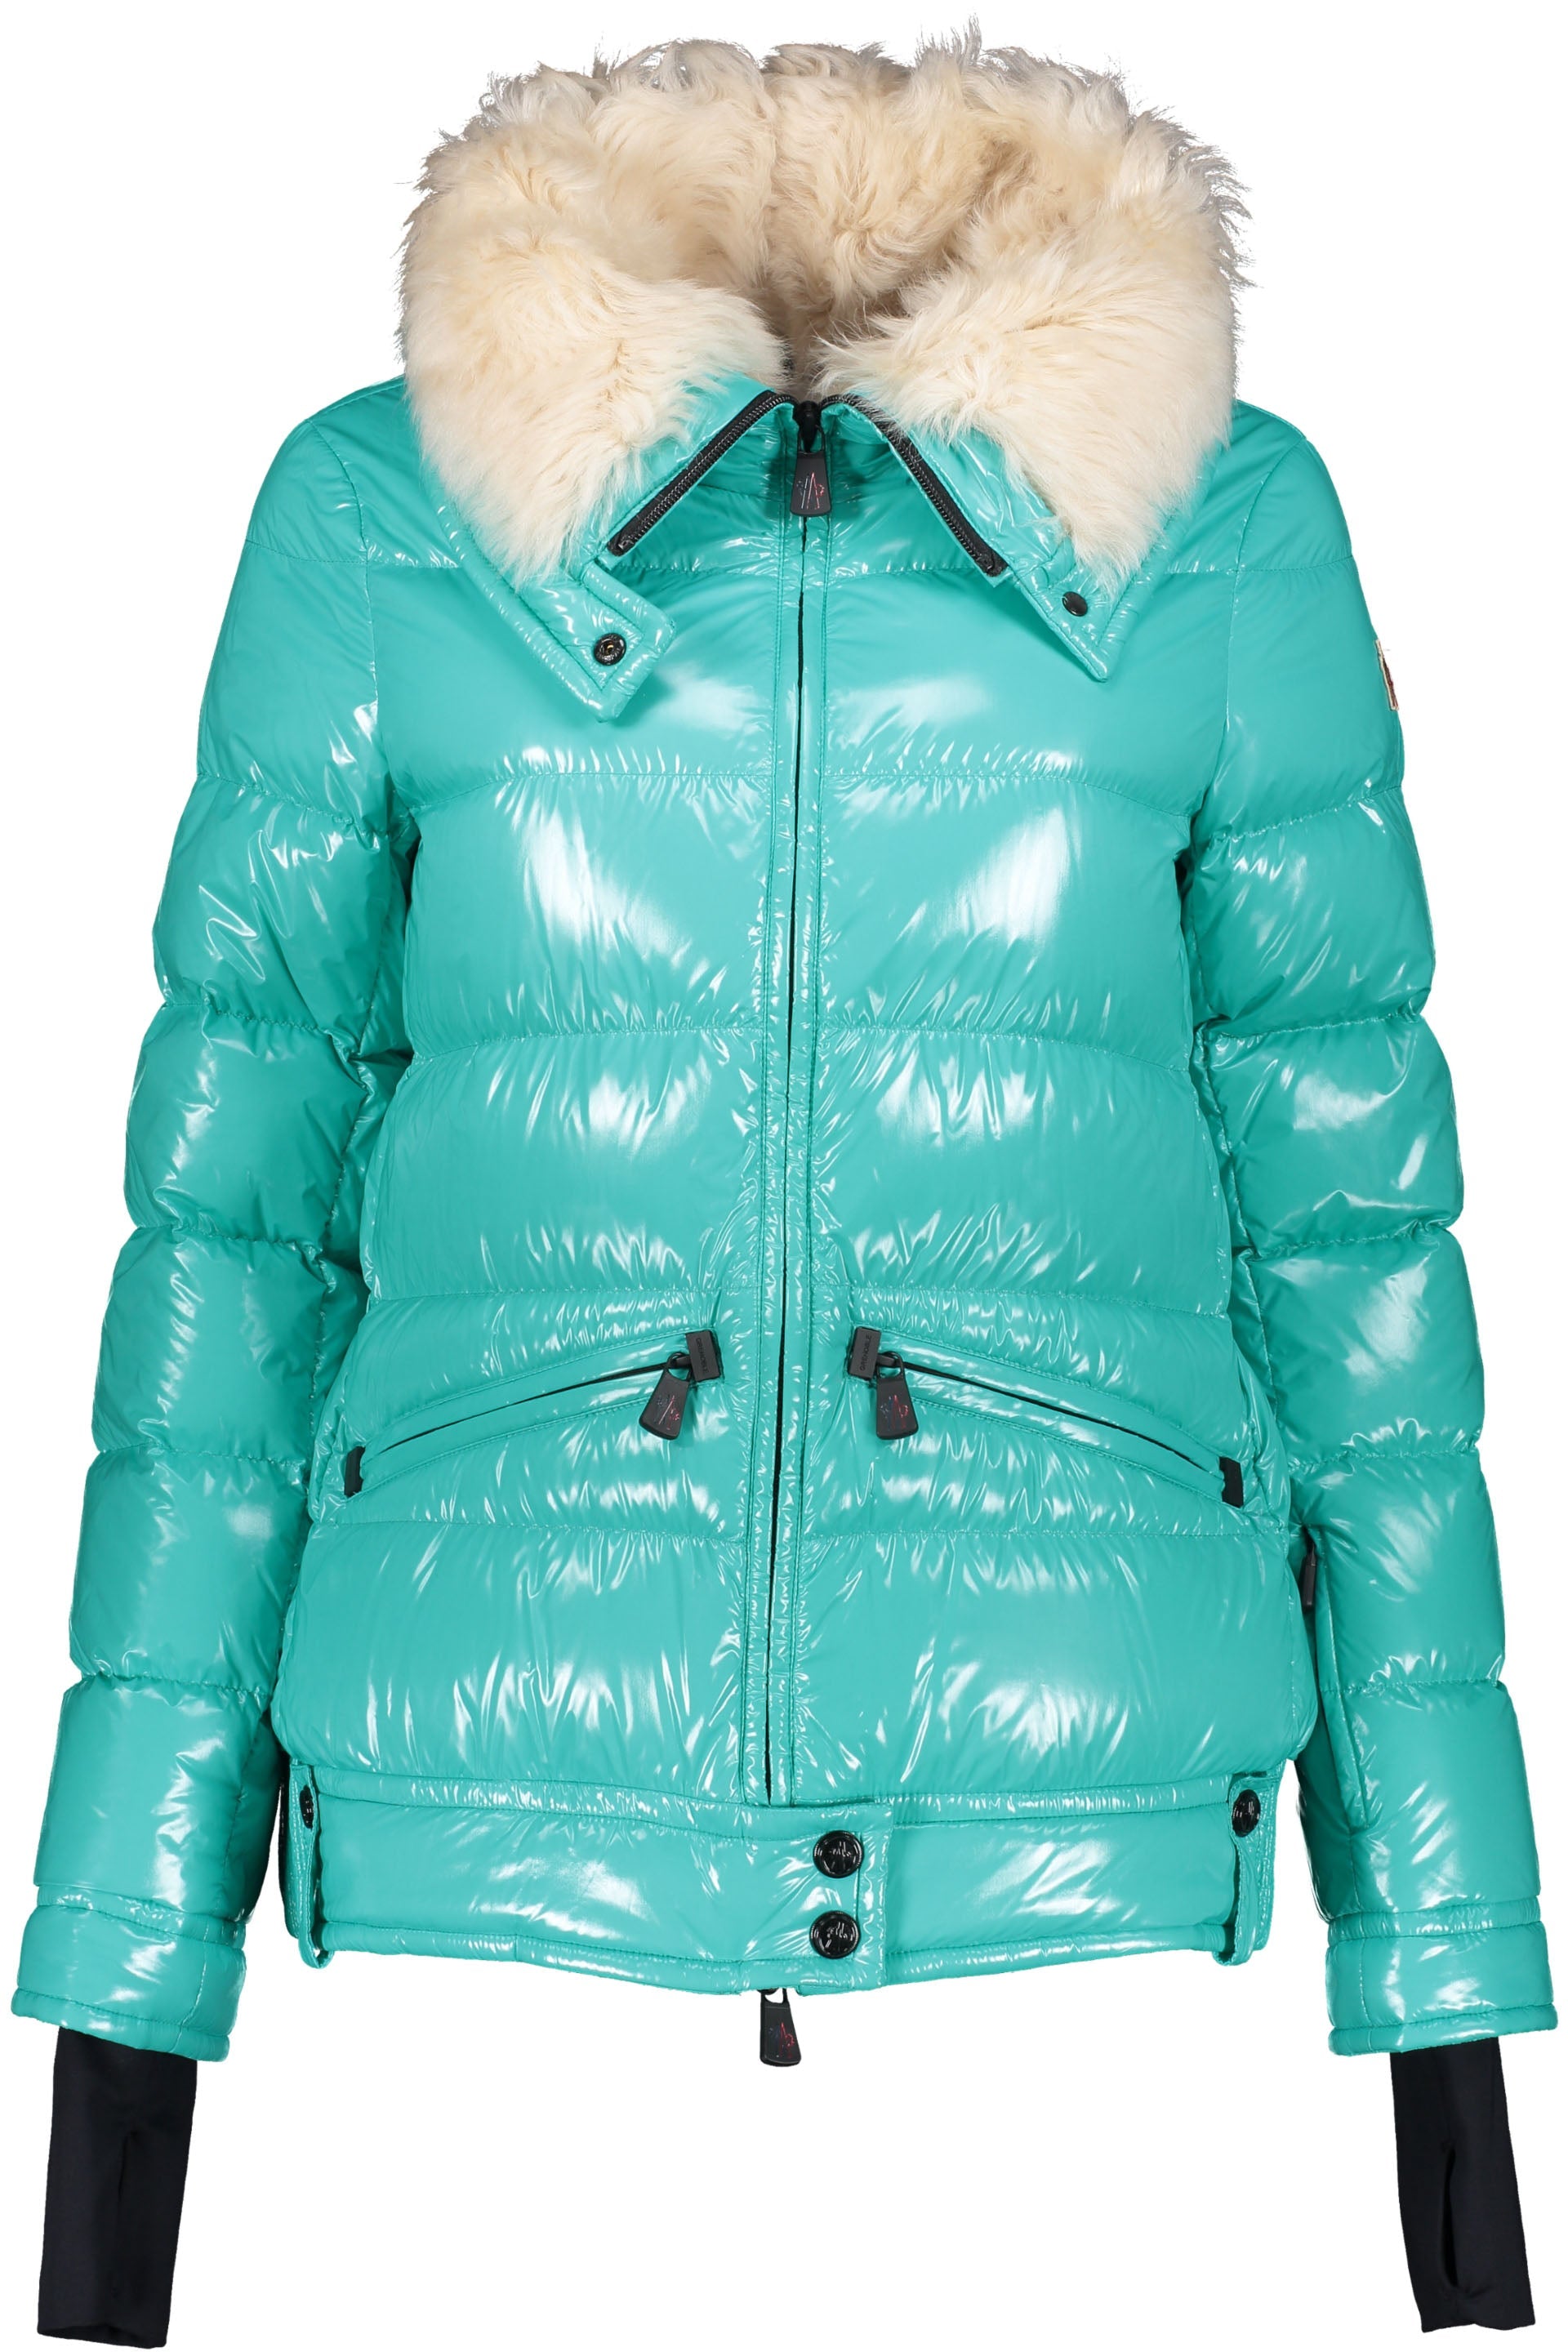 Arabba padded jacket-Moncler Grenoble-OUTLET-SALE-0-ARCHIVIST